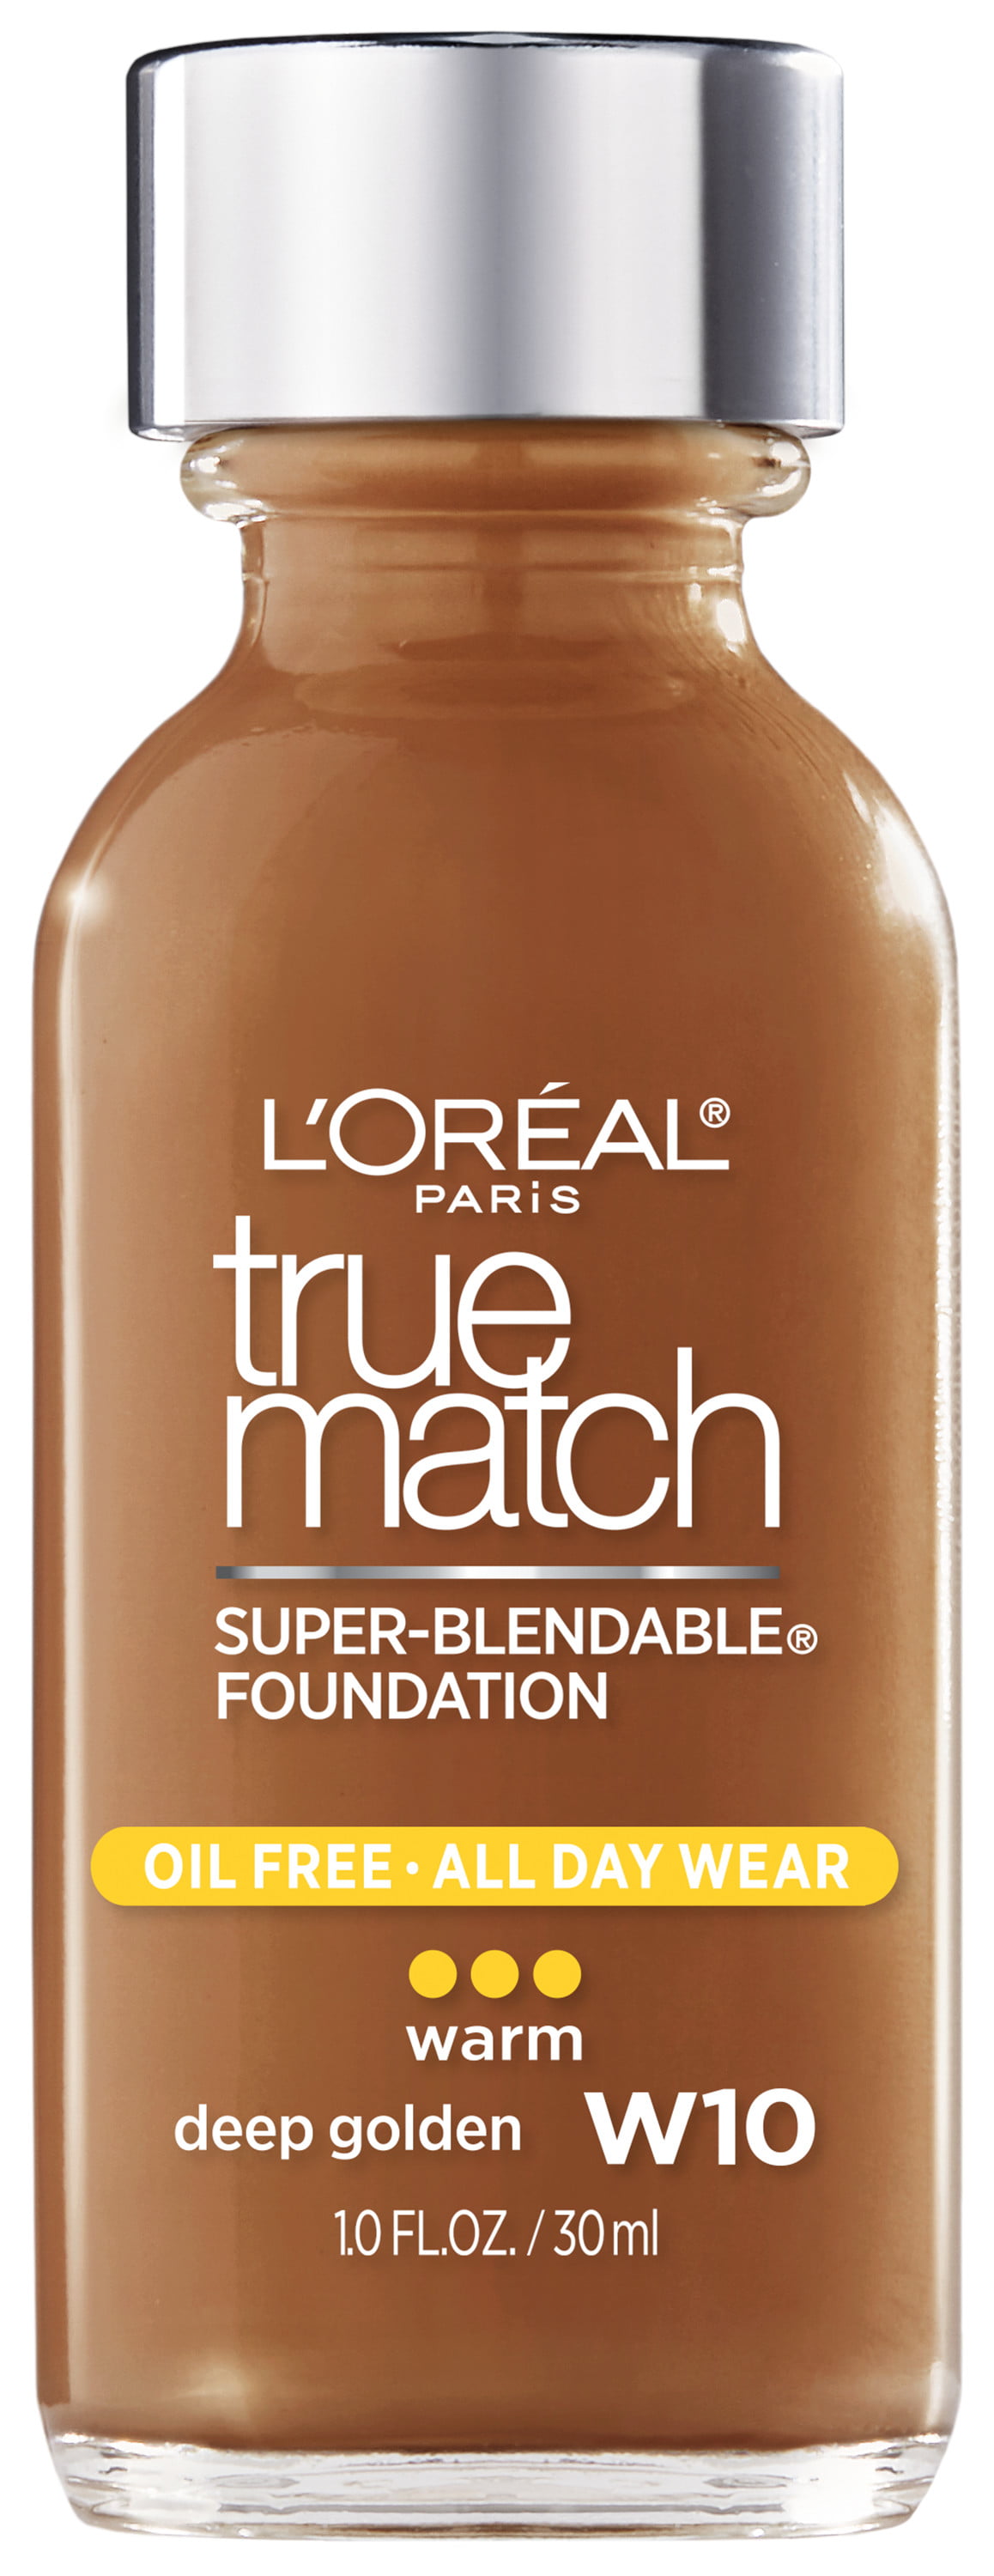 L'Oreal Paris True Match Super-Blendable Liquid Foundation, Deep Golden, 1 fl. oz.